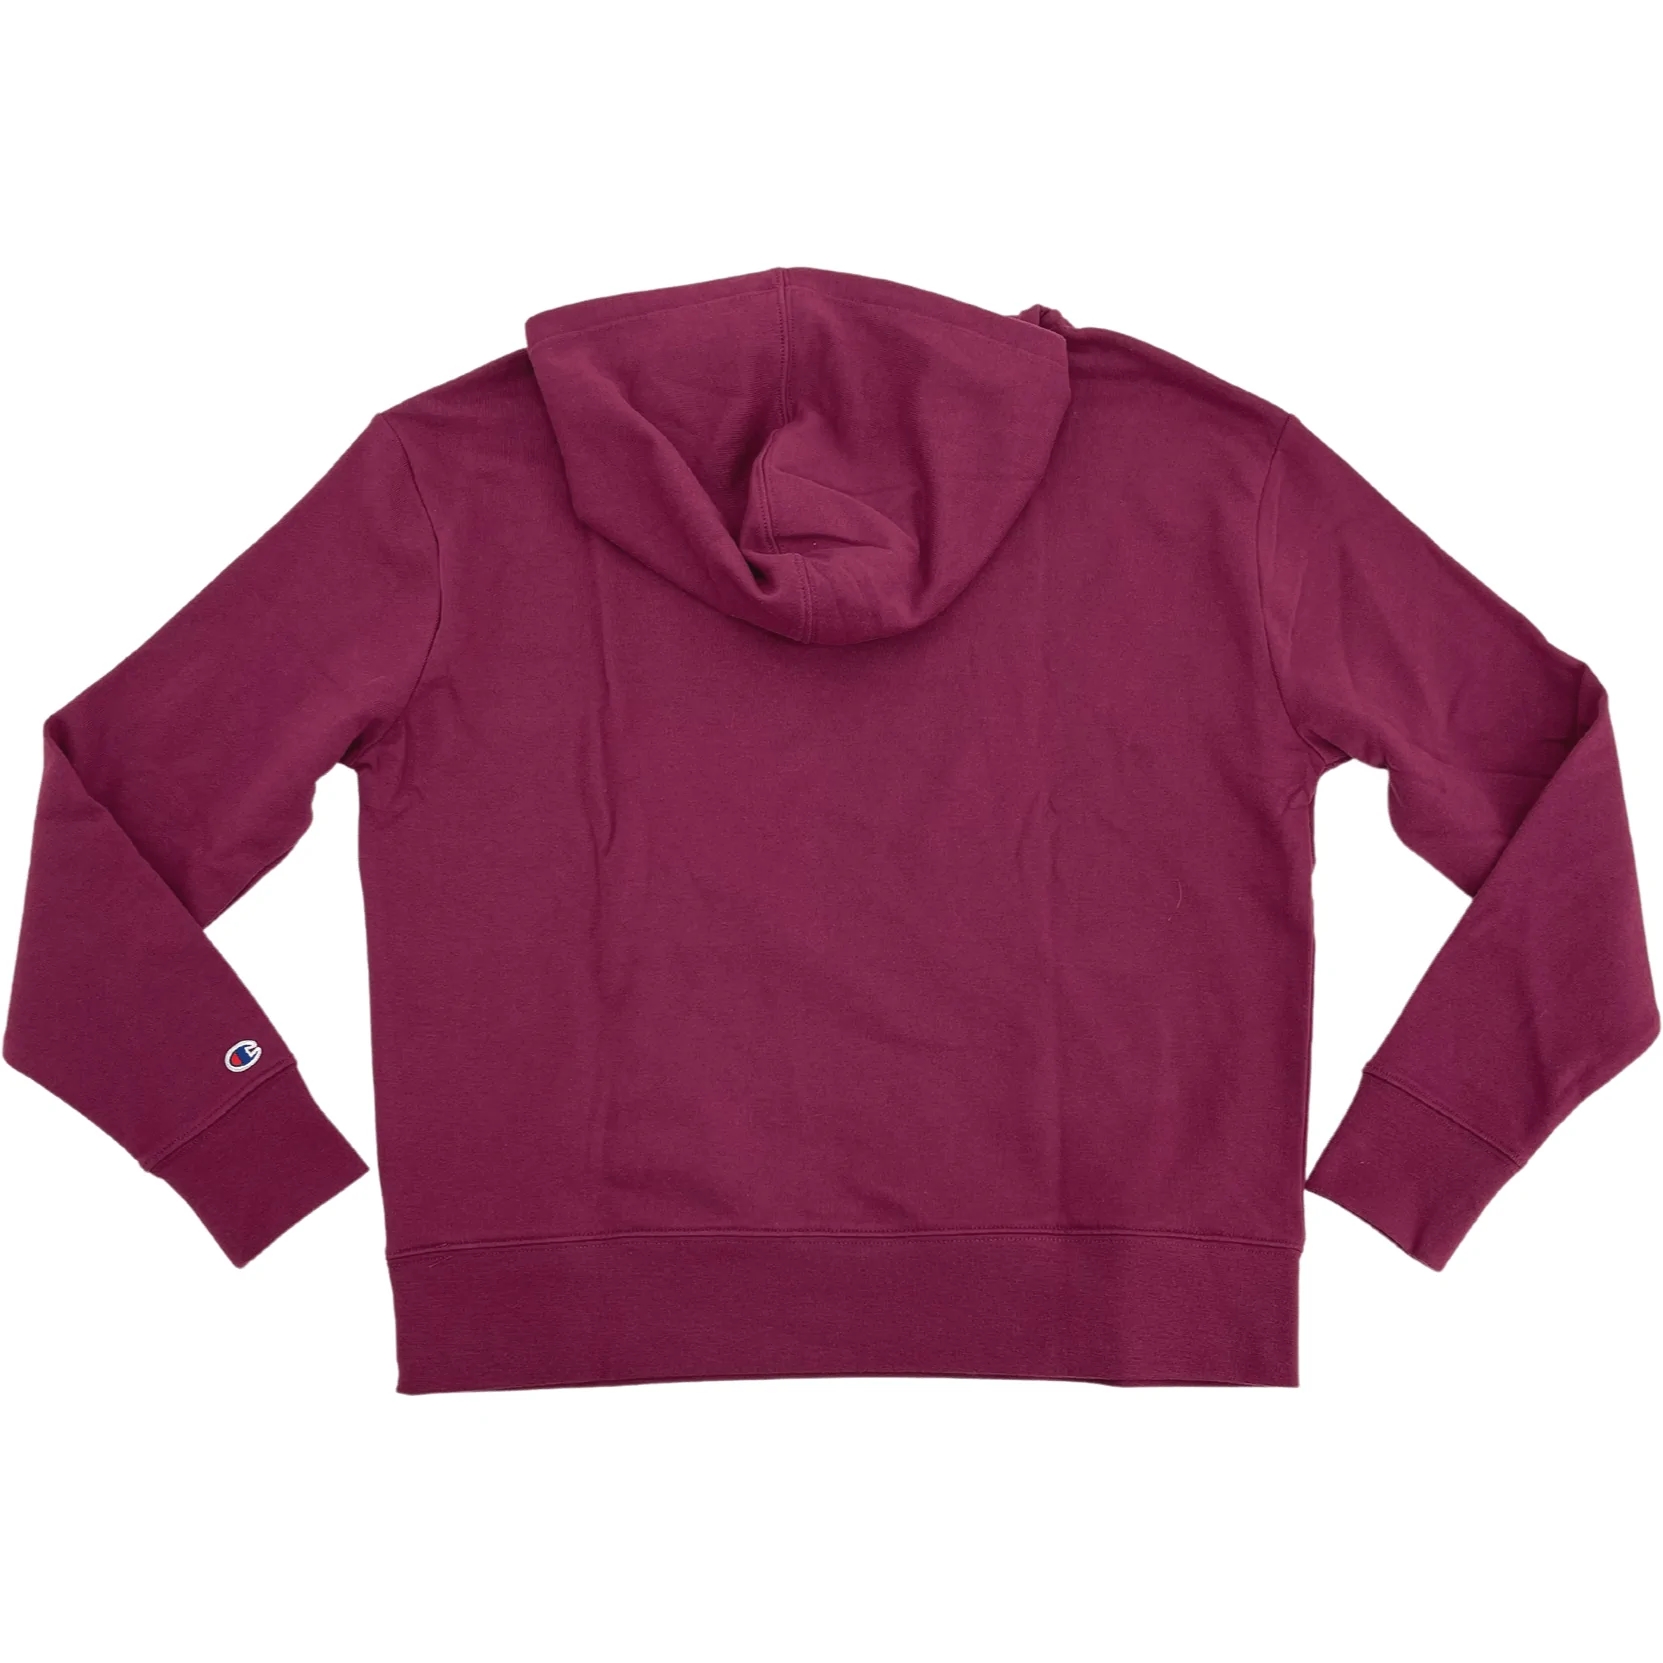 Champion Women’s Burgundy Hooded Sweatshirt / Various Sizes